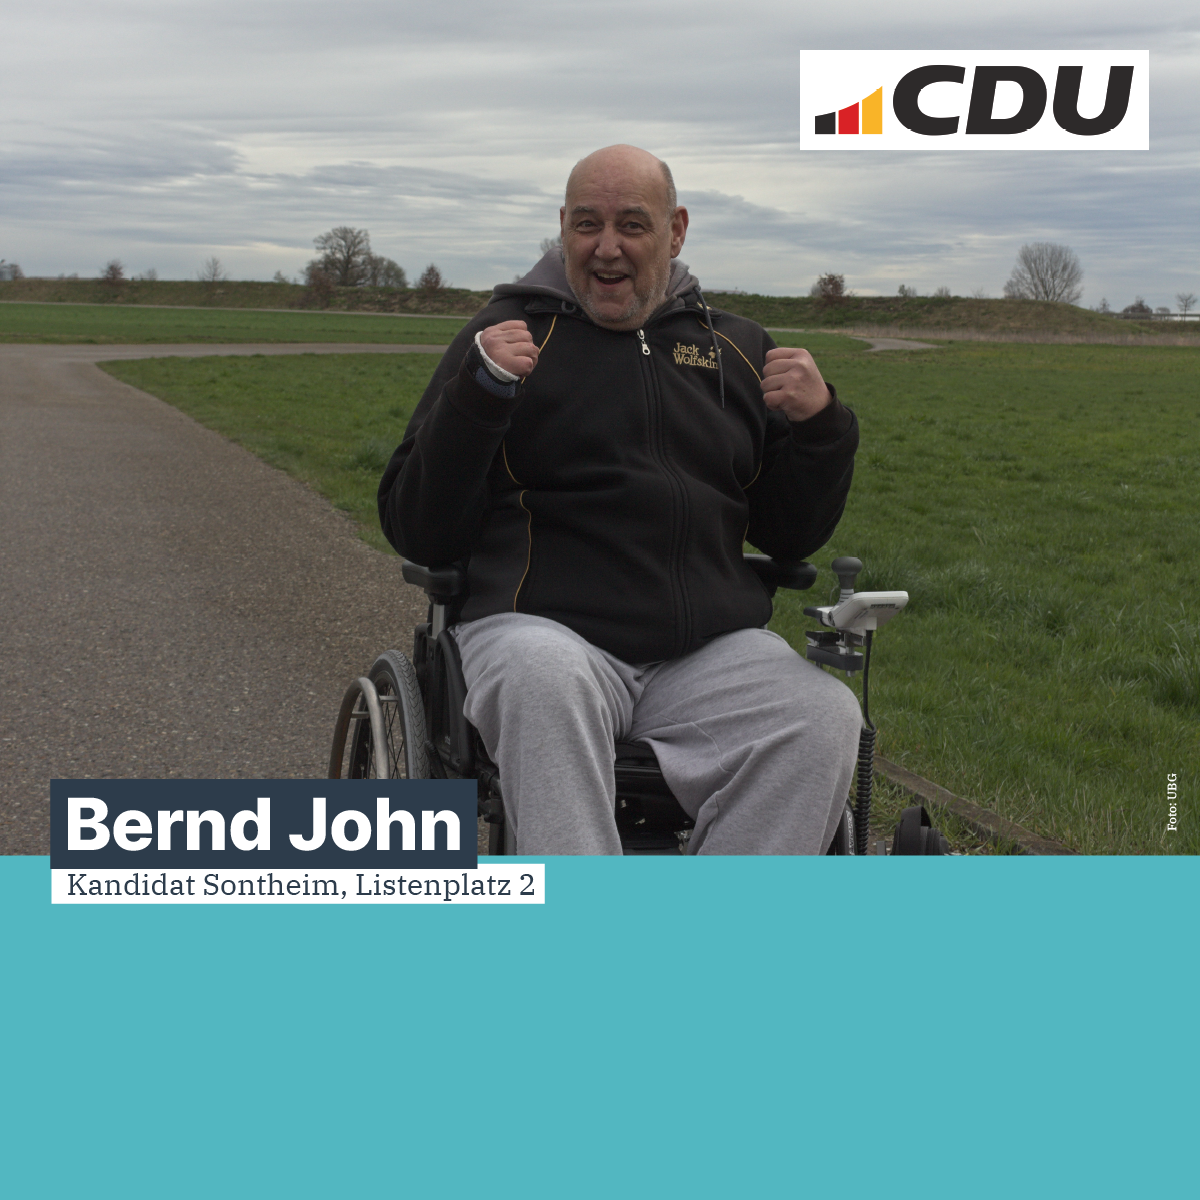  Bernd John